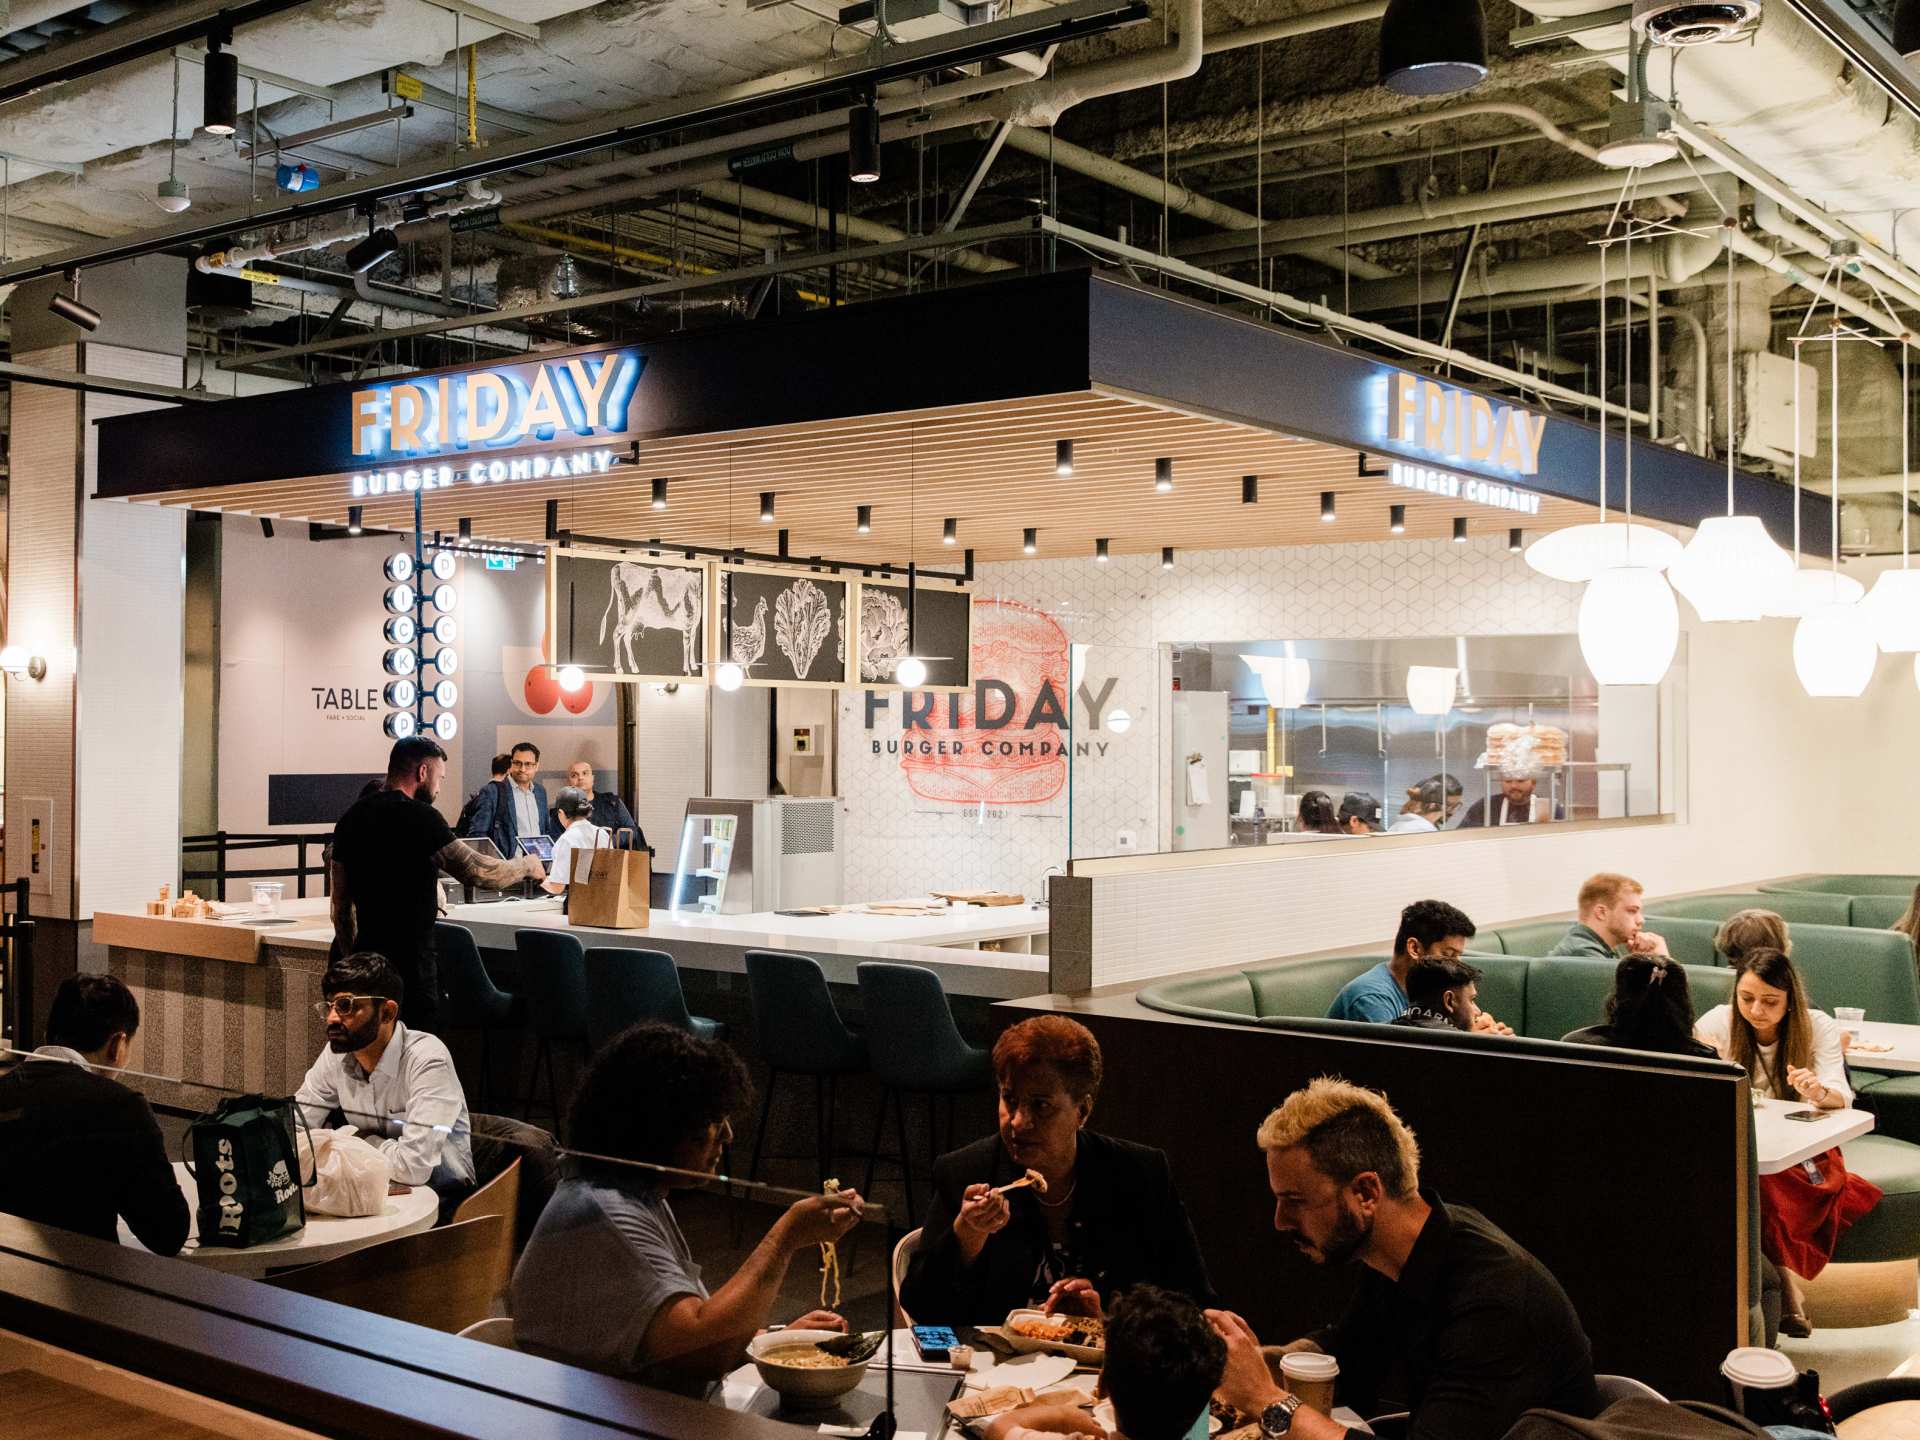 New Toronto restaurants | Friday Burger Company at TABLE Fare + Social